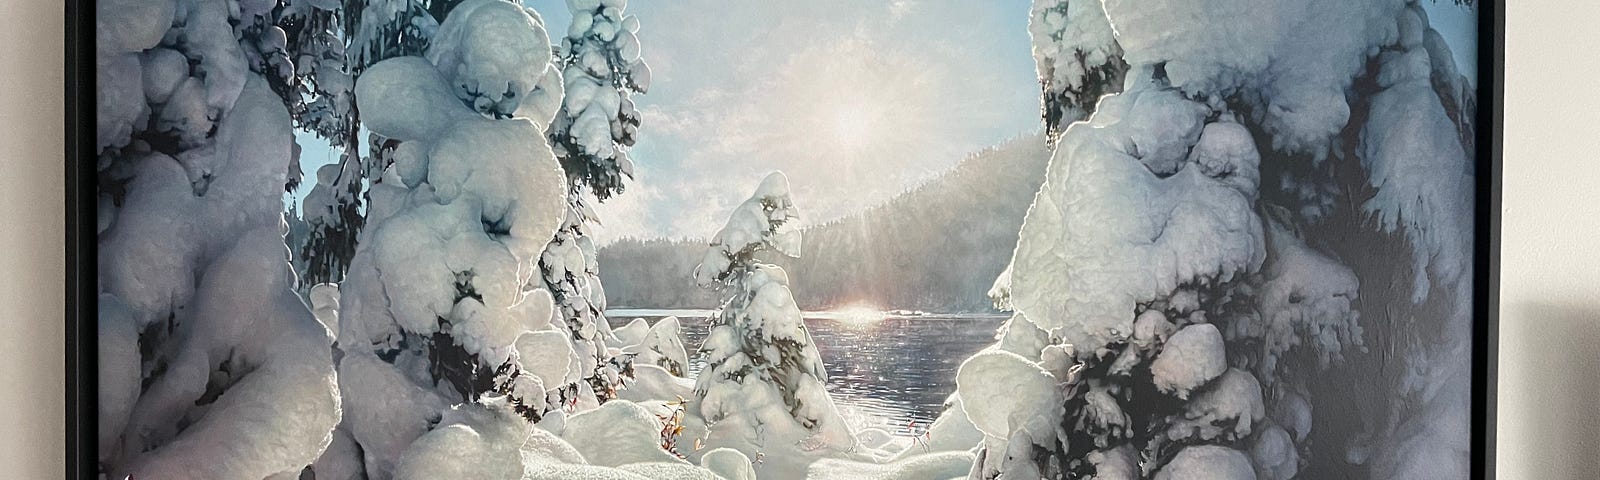 Sun reaches around a mountain reflecting on a lake amidst snow-laden trees.